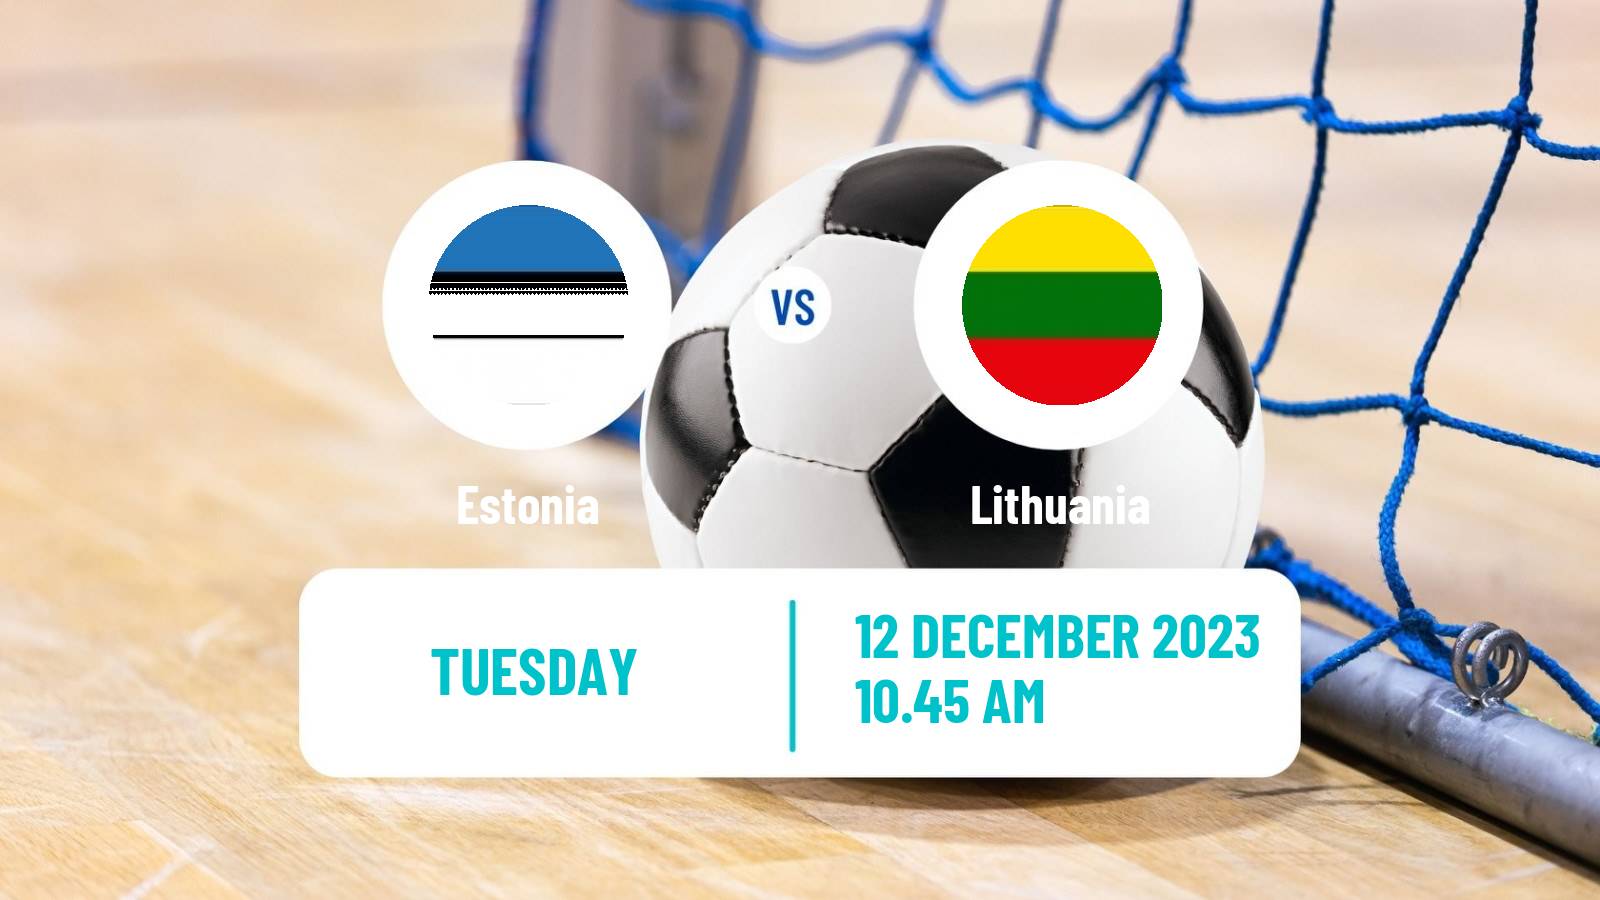 Futsal Friendly International Futsal Estonia - Lithuania